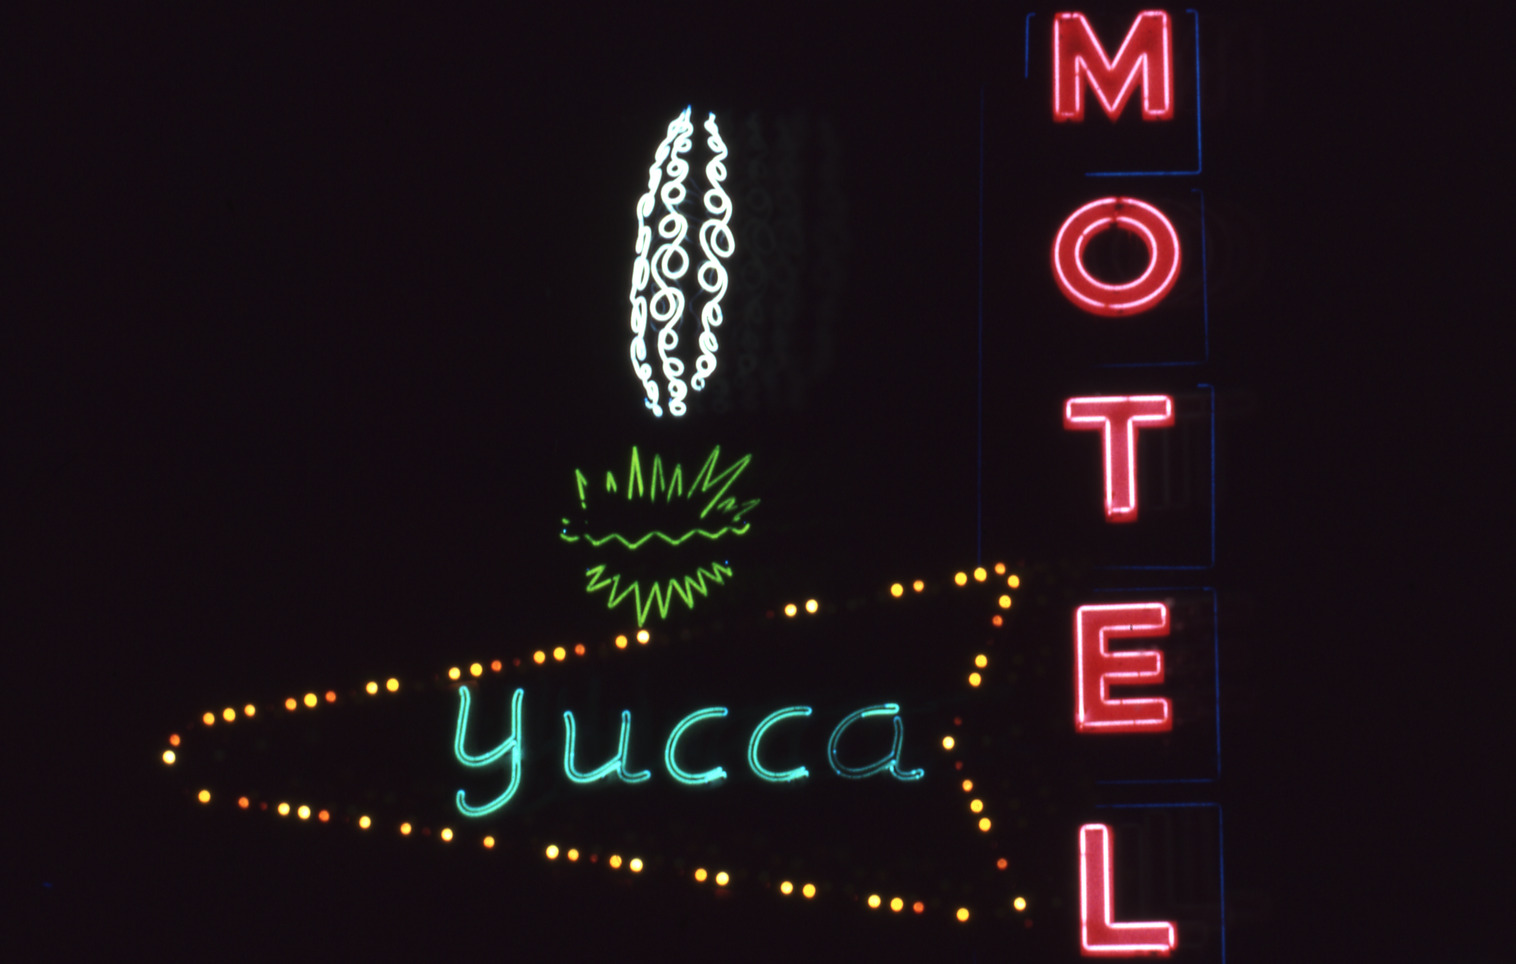 Yucca Motel sign, Las Vegas, Nevada: photographic print